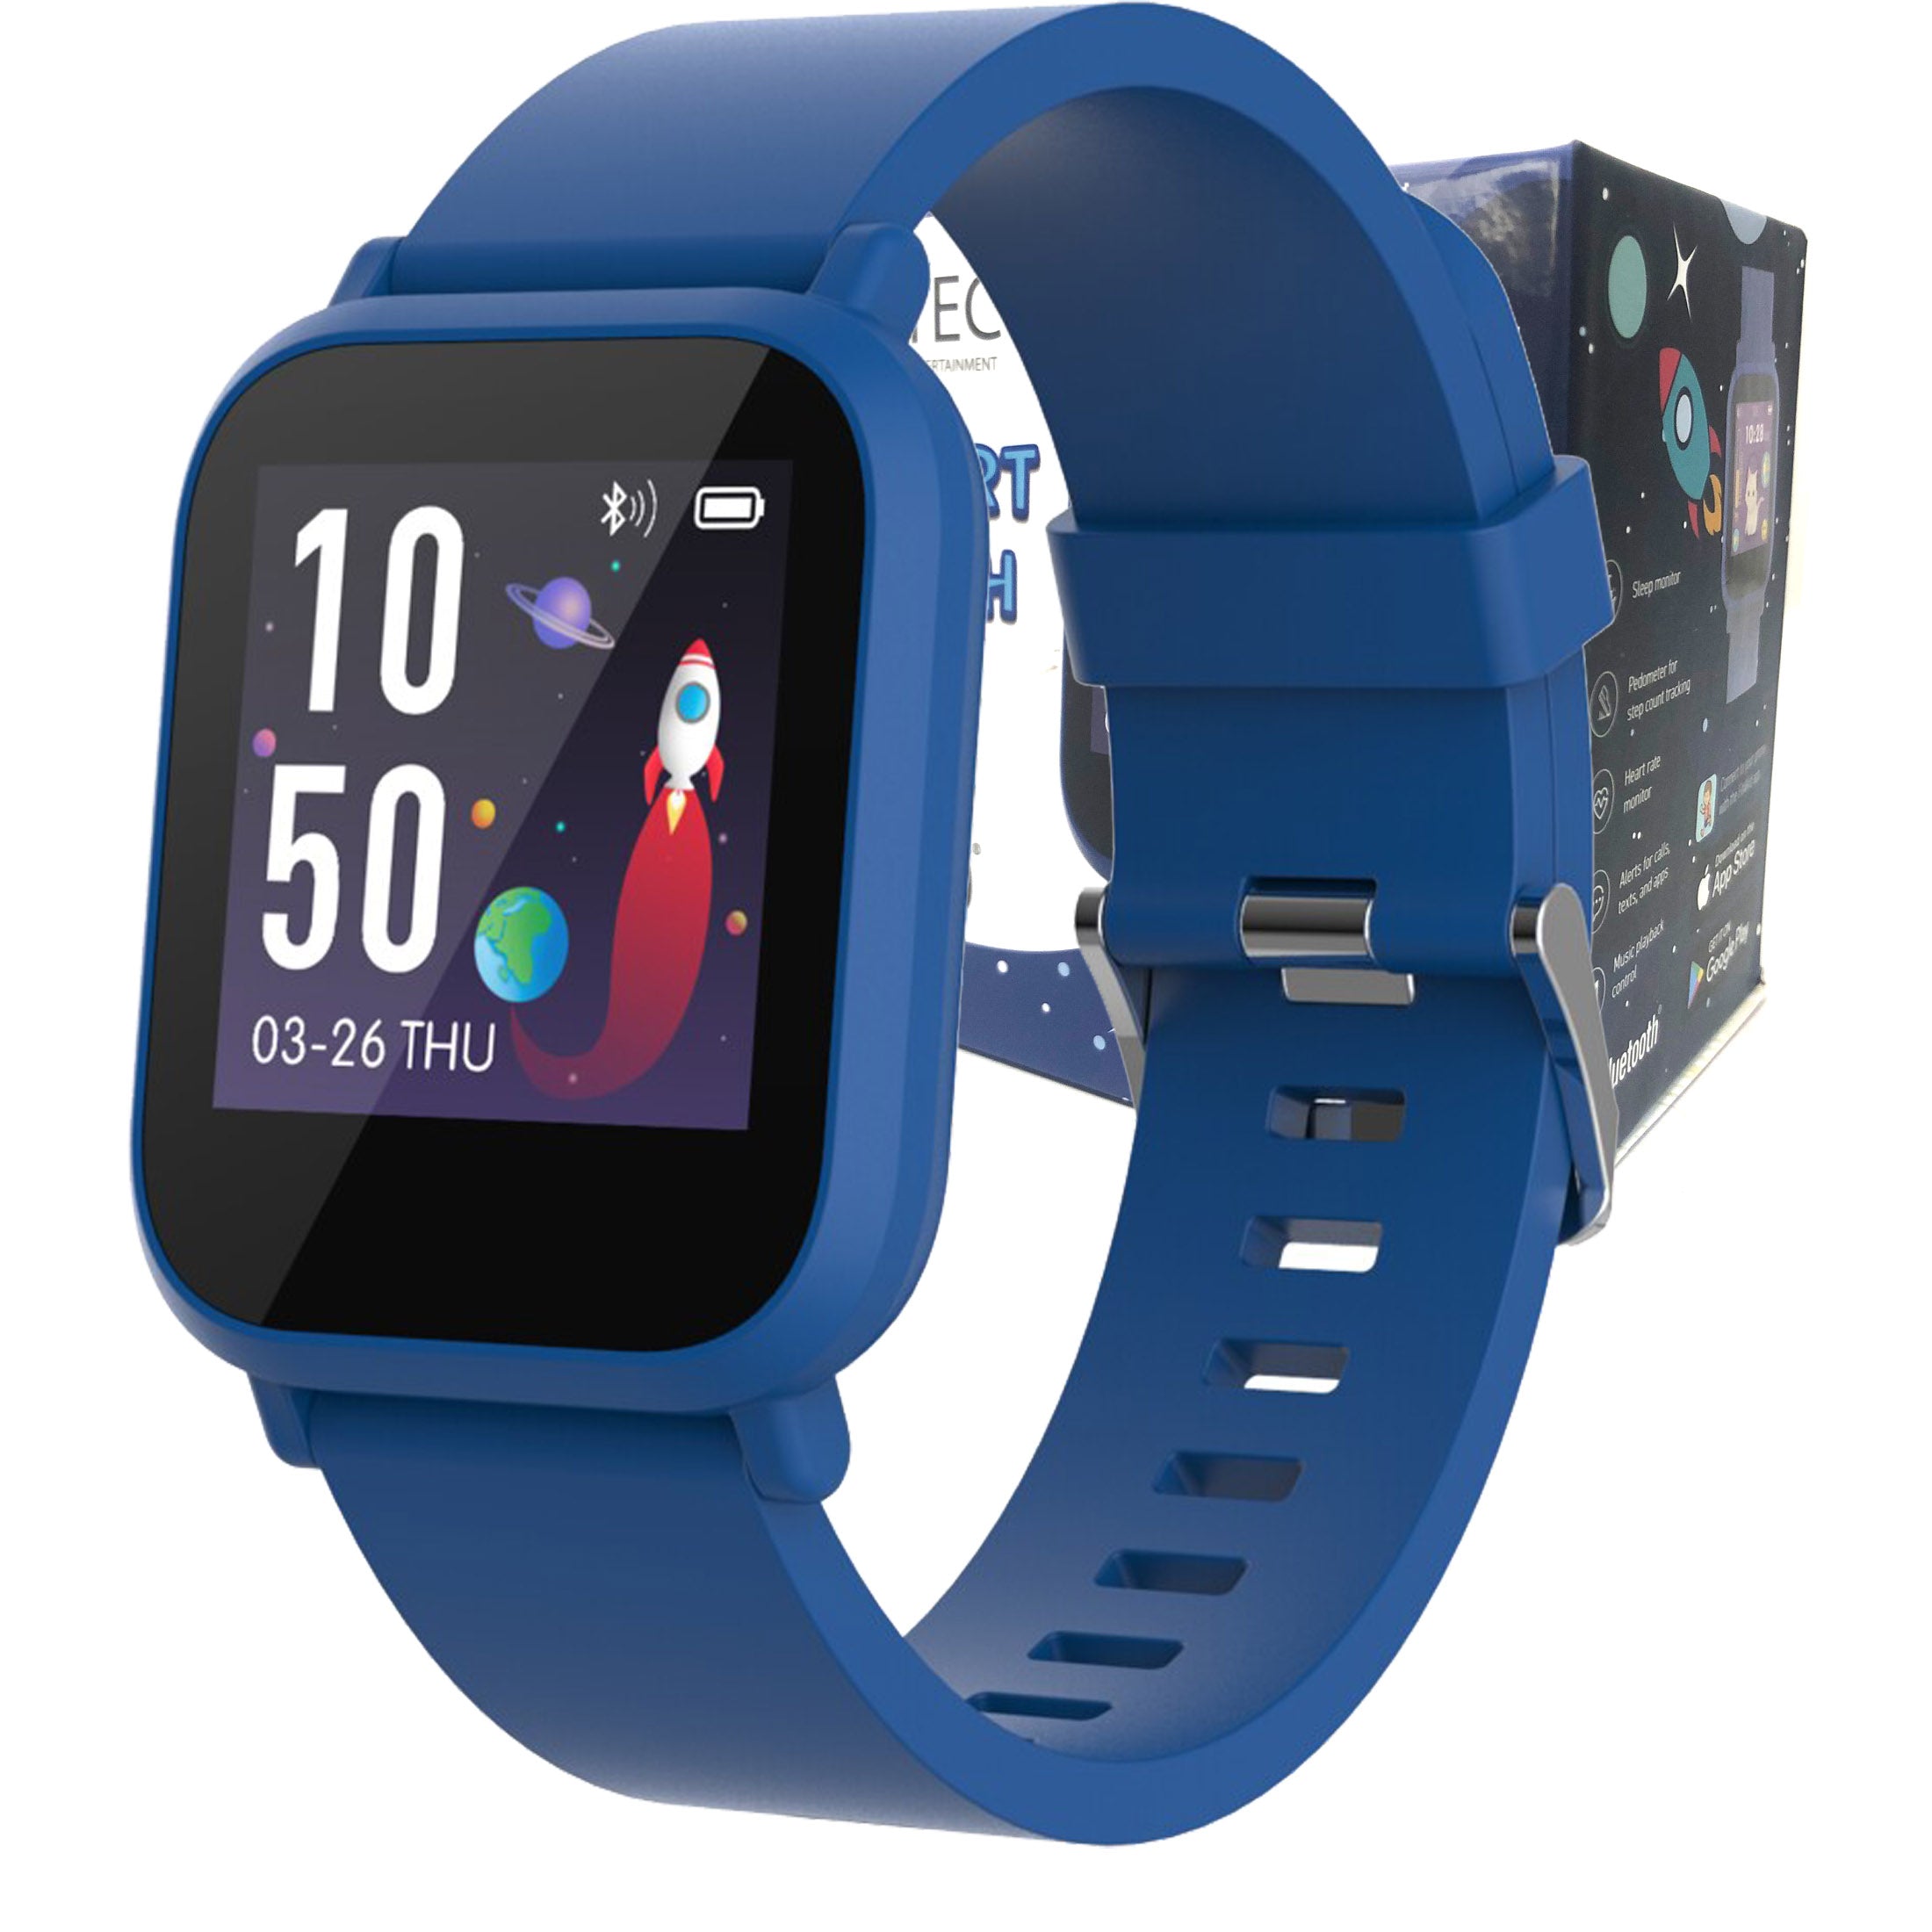 New DGTEC Kids Kidi Smart Watch Fit4Kid App Fitness Sport Galactic Blue